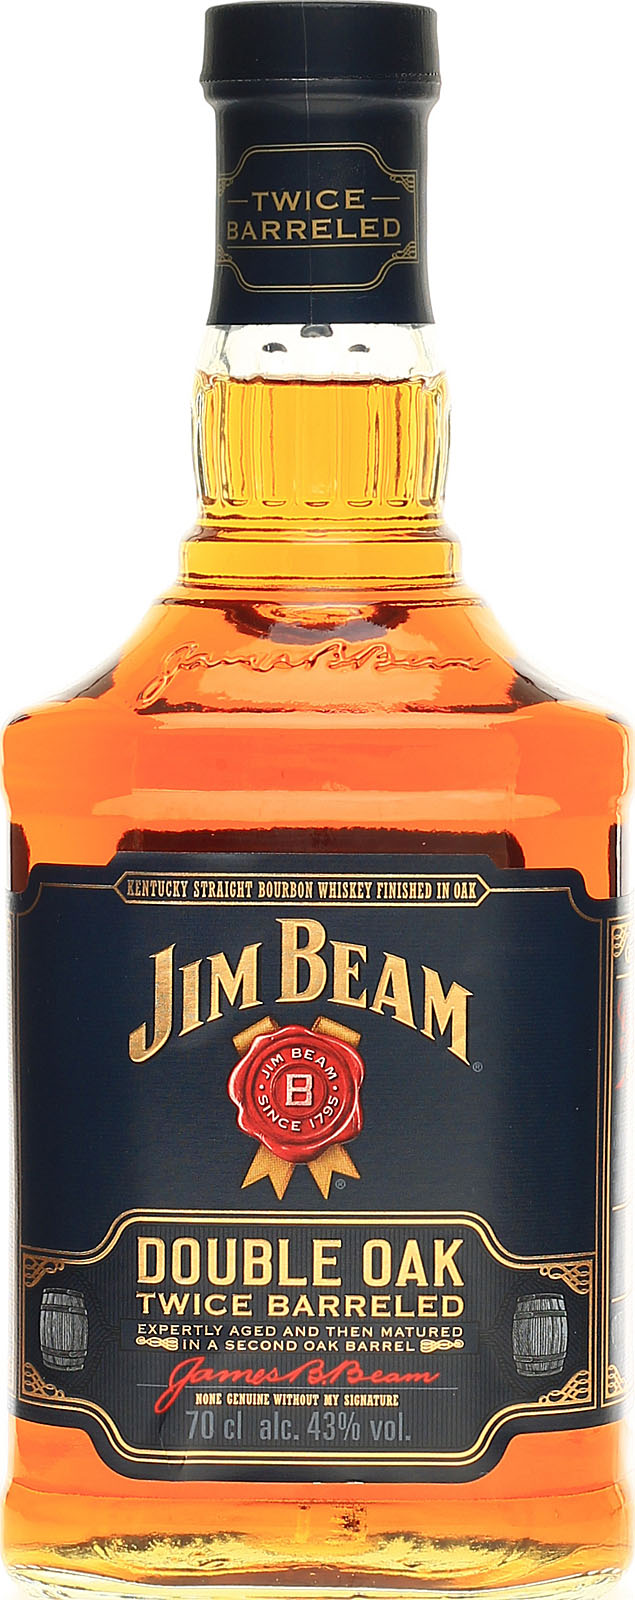 Jim Beam Double Oak Twice Barreled Whisky bei uns im Sh